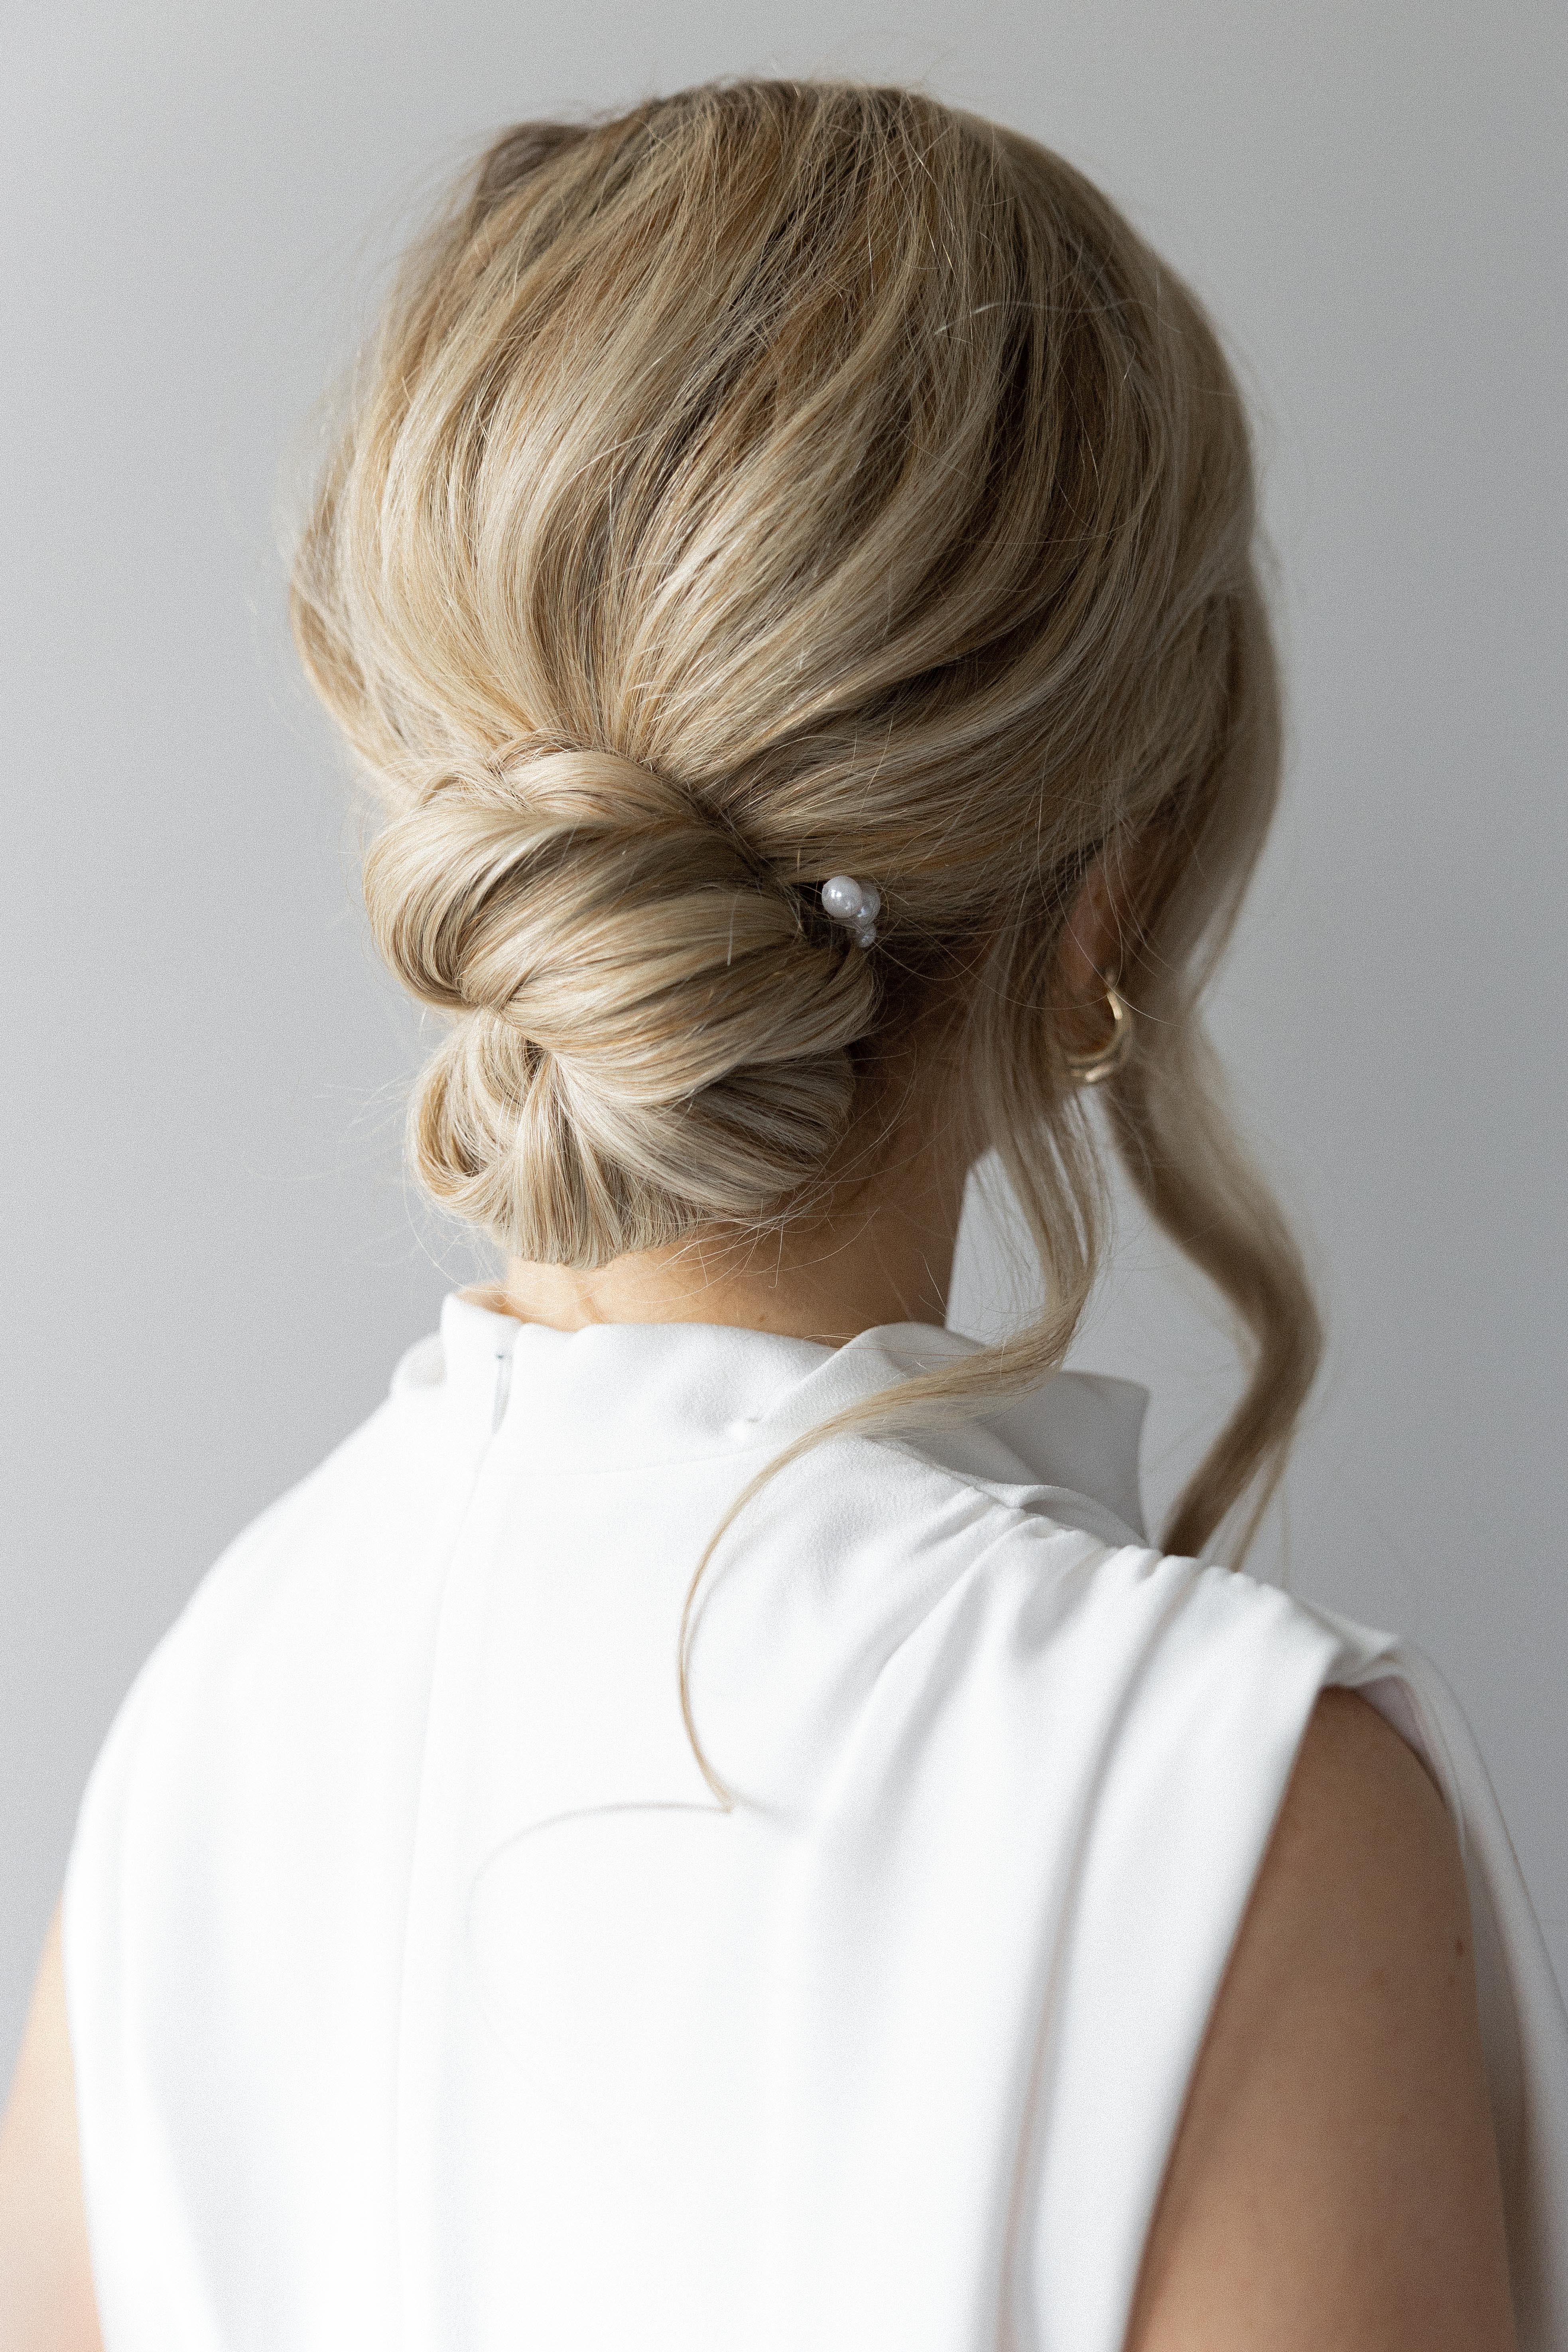 Easy Low Bun Hair Tutorial Perfect for Bridal, Weddings & Prom | www.alexgaboury.com